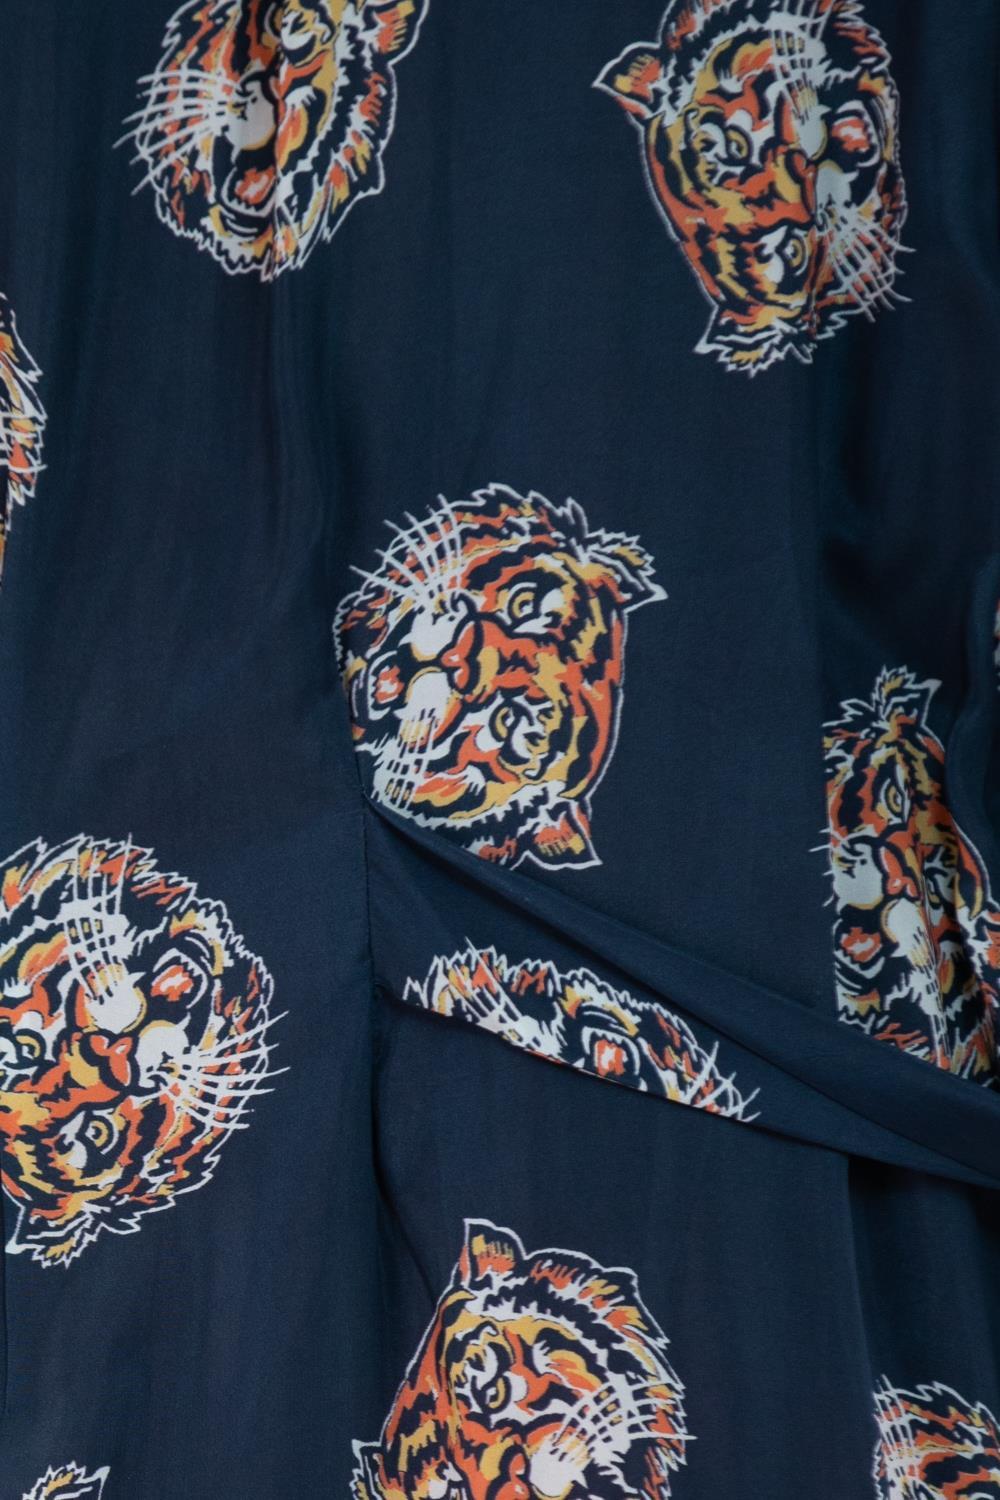 Morphew Collection Indigo Blue Tiger Head Novelty Print Cold Rayon Bias Kimono  For Sale 5